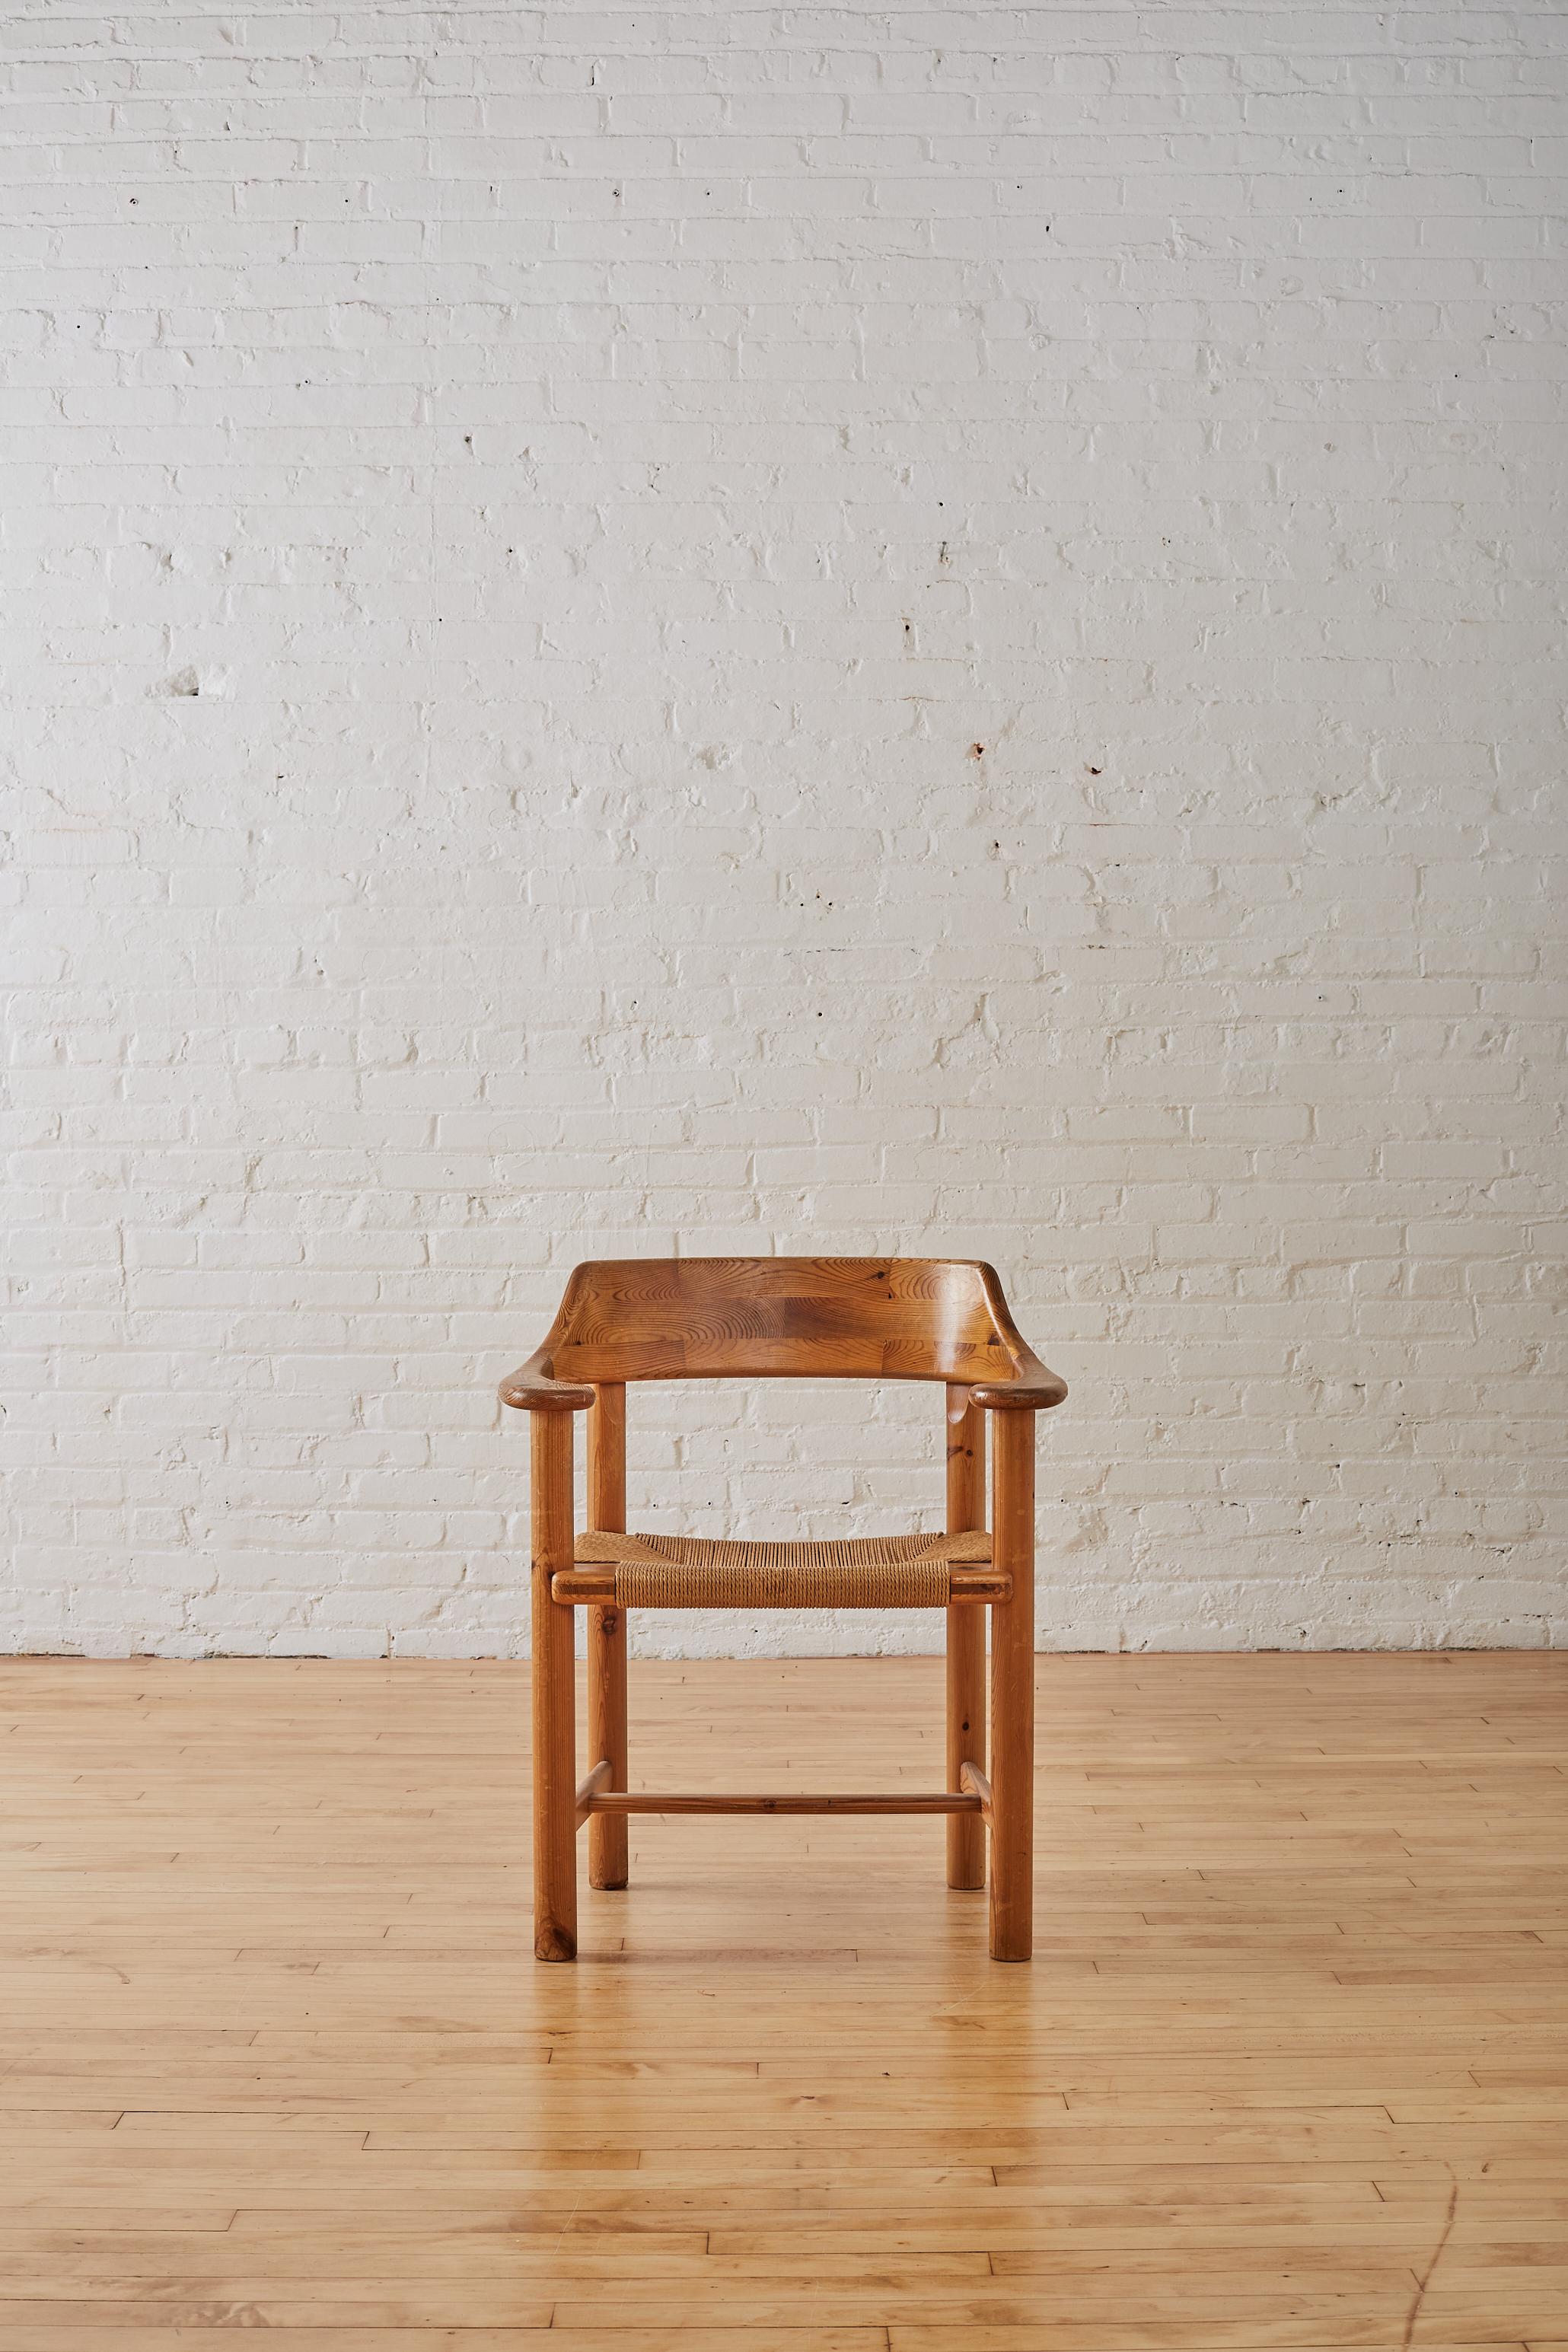 Danish Modern solid pine armchair designed by architect Rainer Daumiller for Hirtshals Sawmill.

